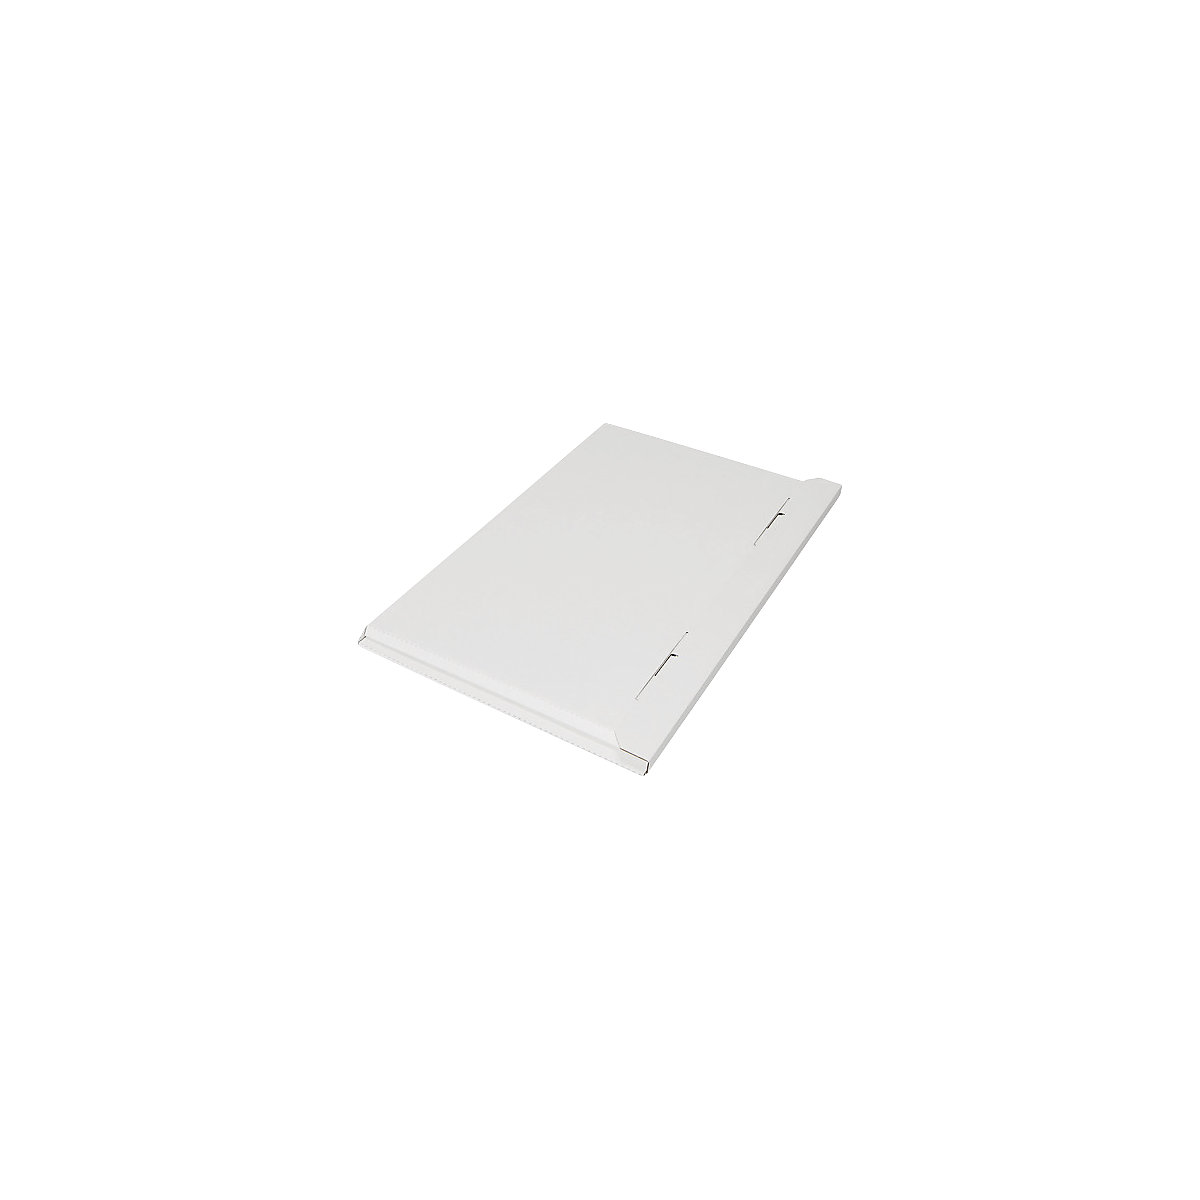 Flach-/Kalender-Pack, 1-wellig, Innen-LxBxH 630 x 450 x 10 mm, weiß, ab 20 Stk-8